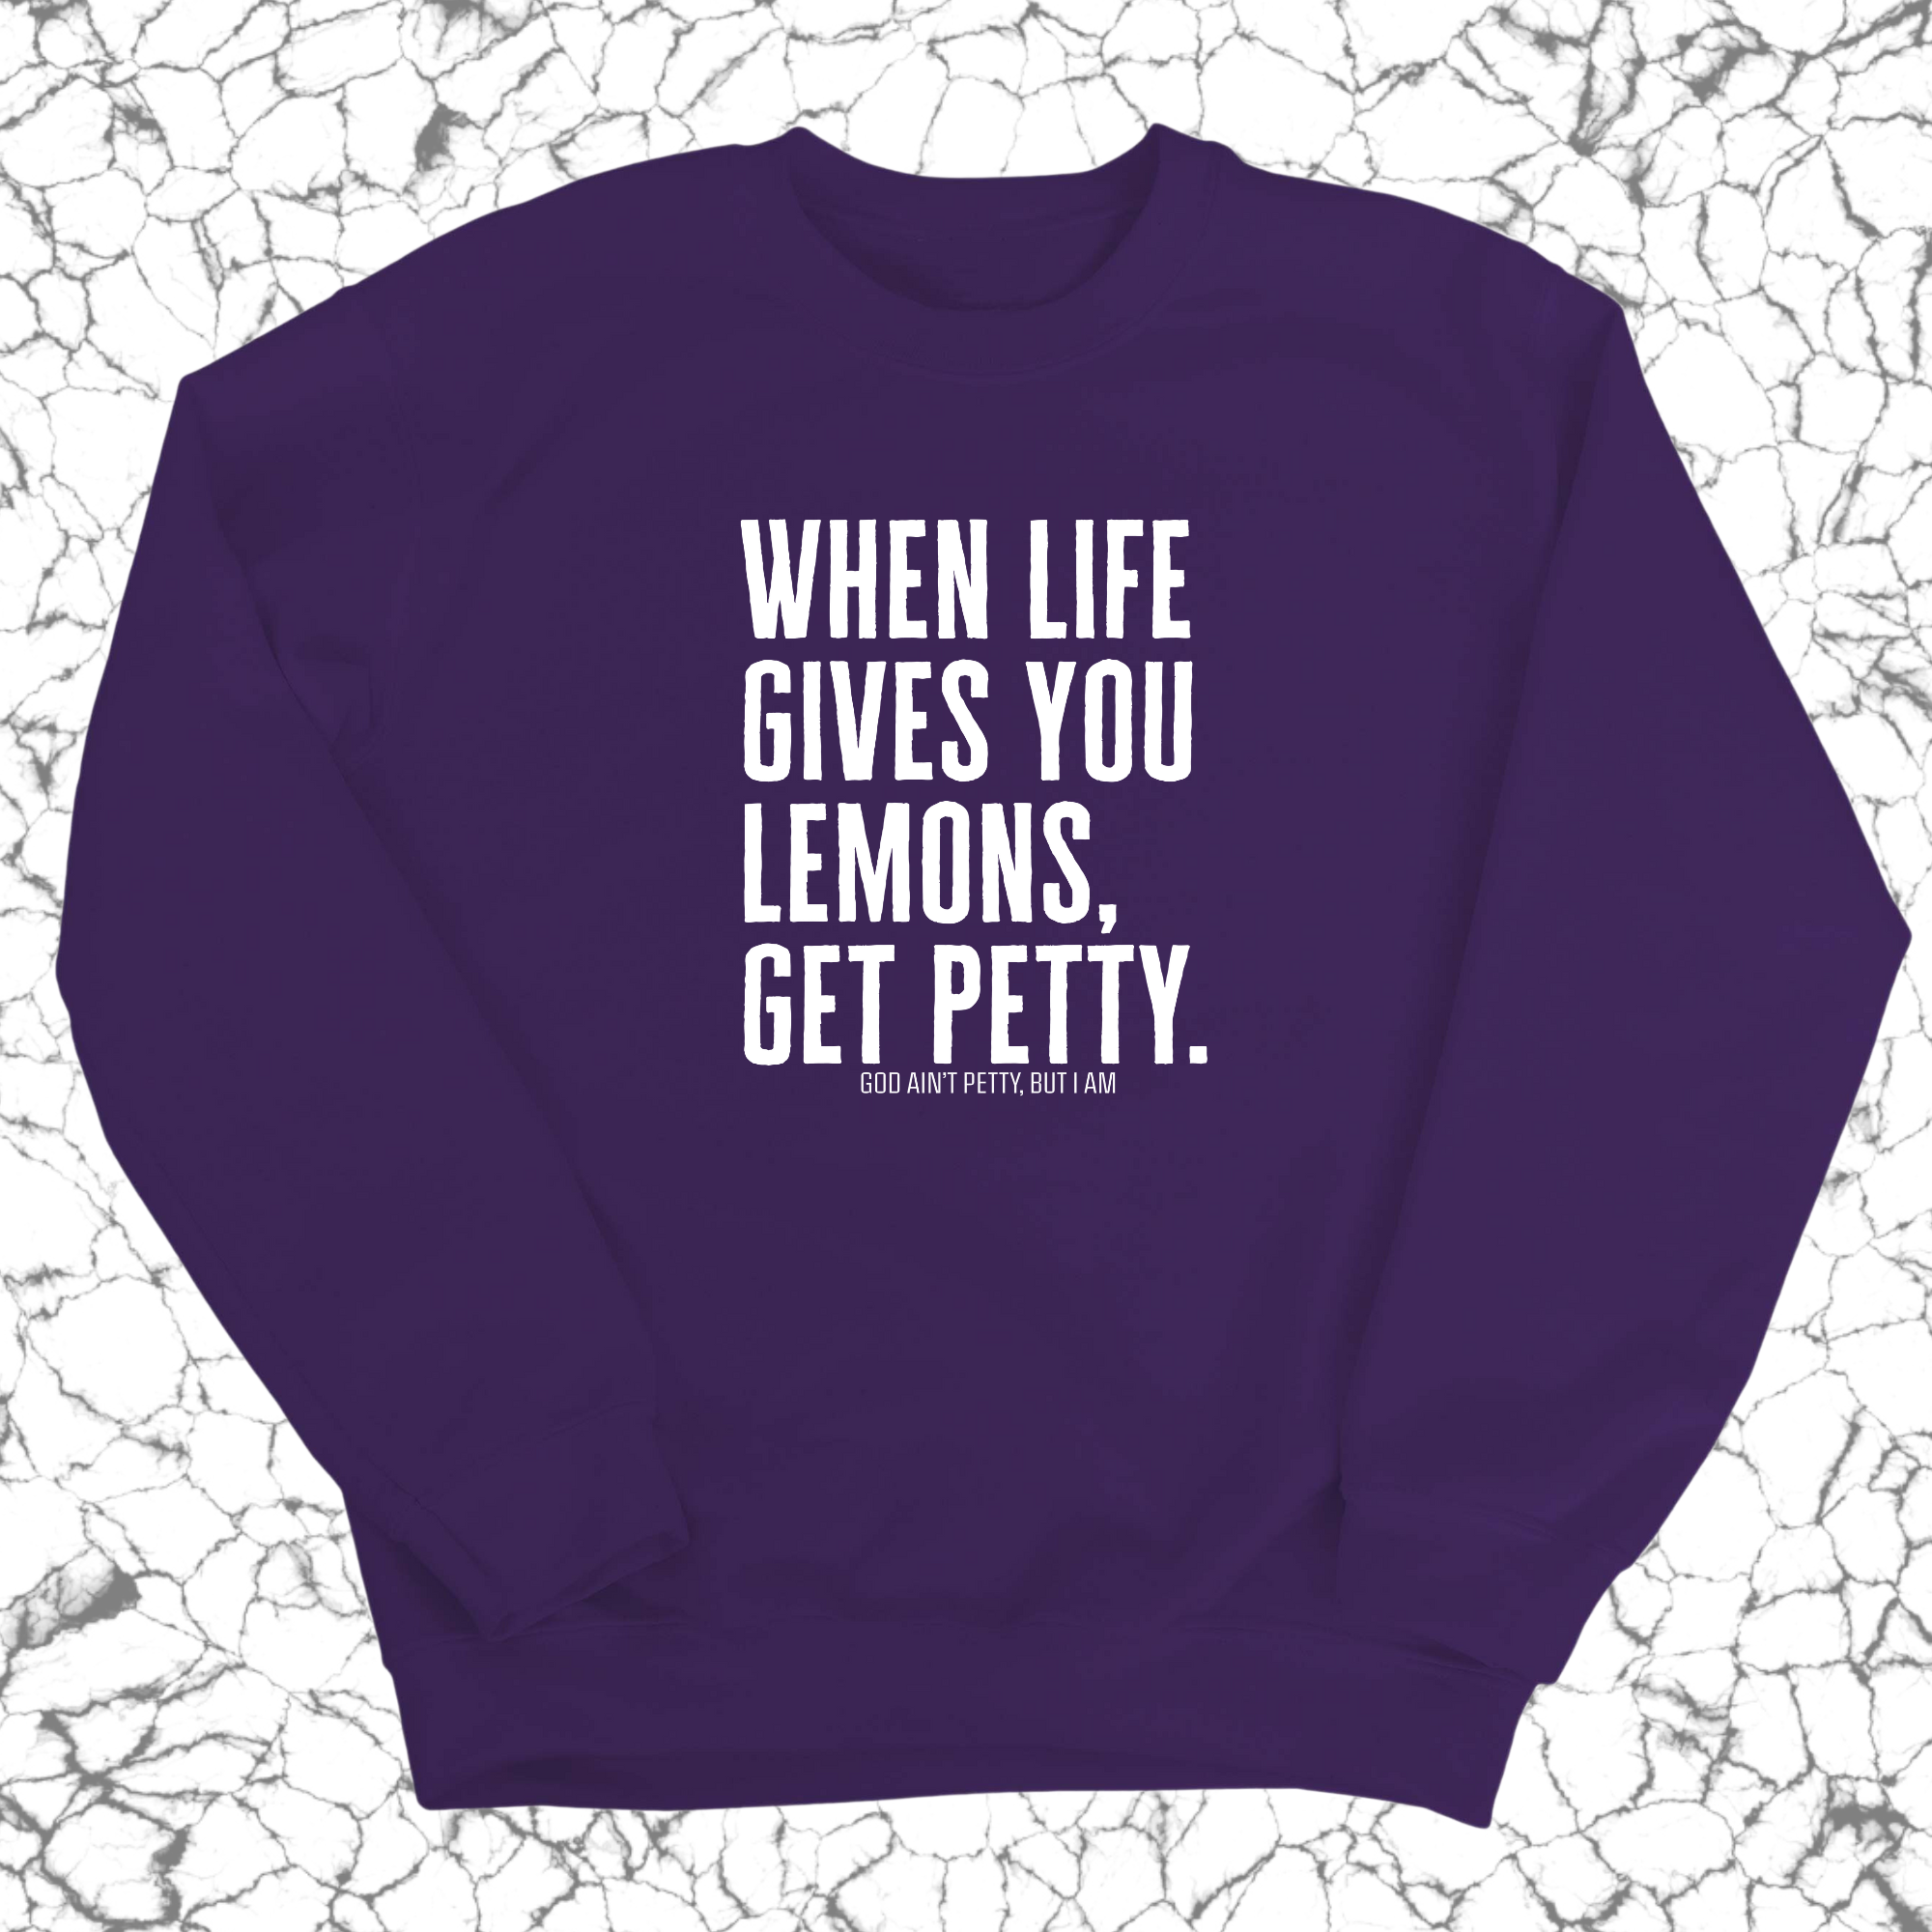 When life gives you lemons, get petty Unisex Sweatshirt-Sweatshirt-The Original God Ain't Petty But I Am